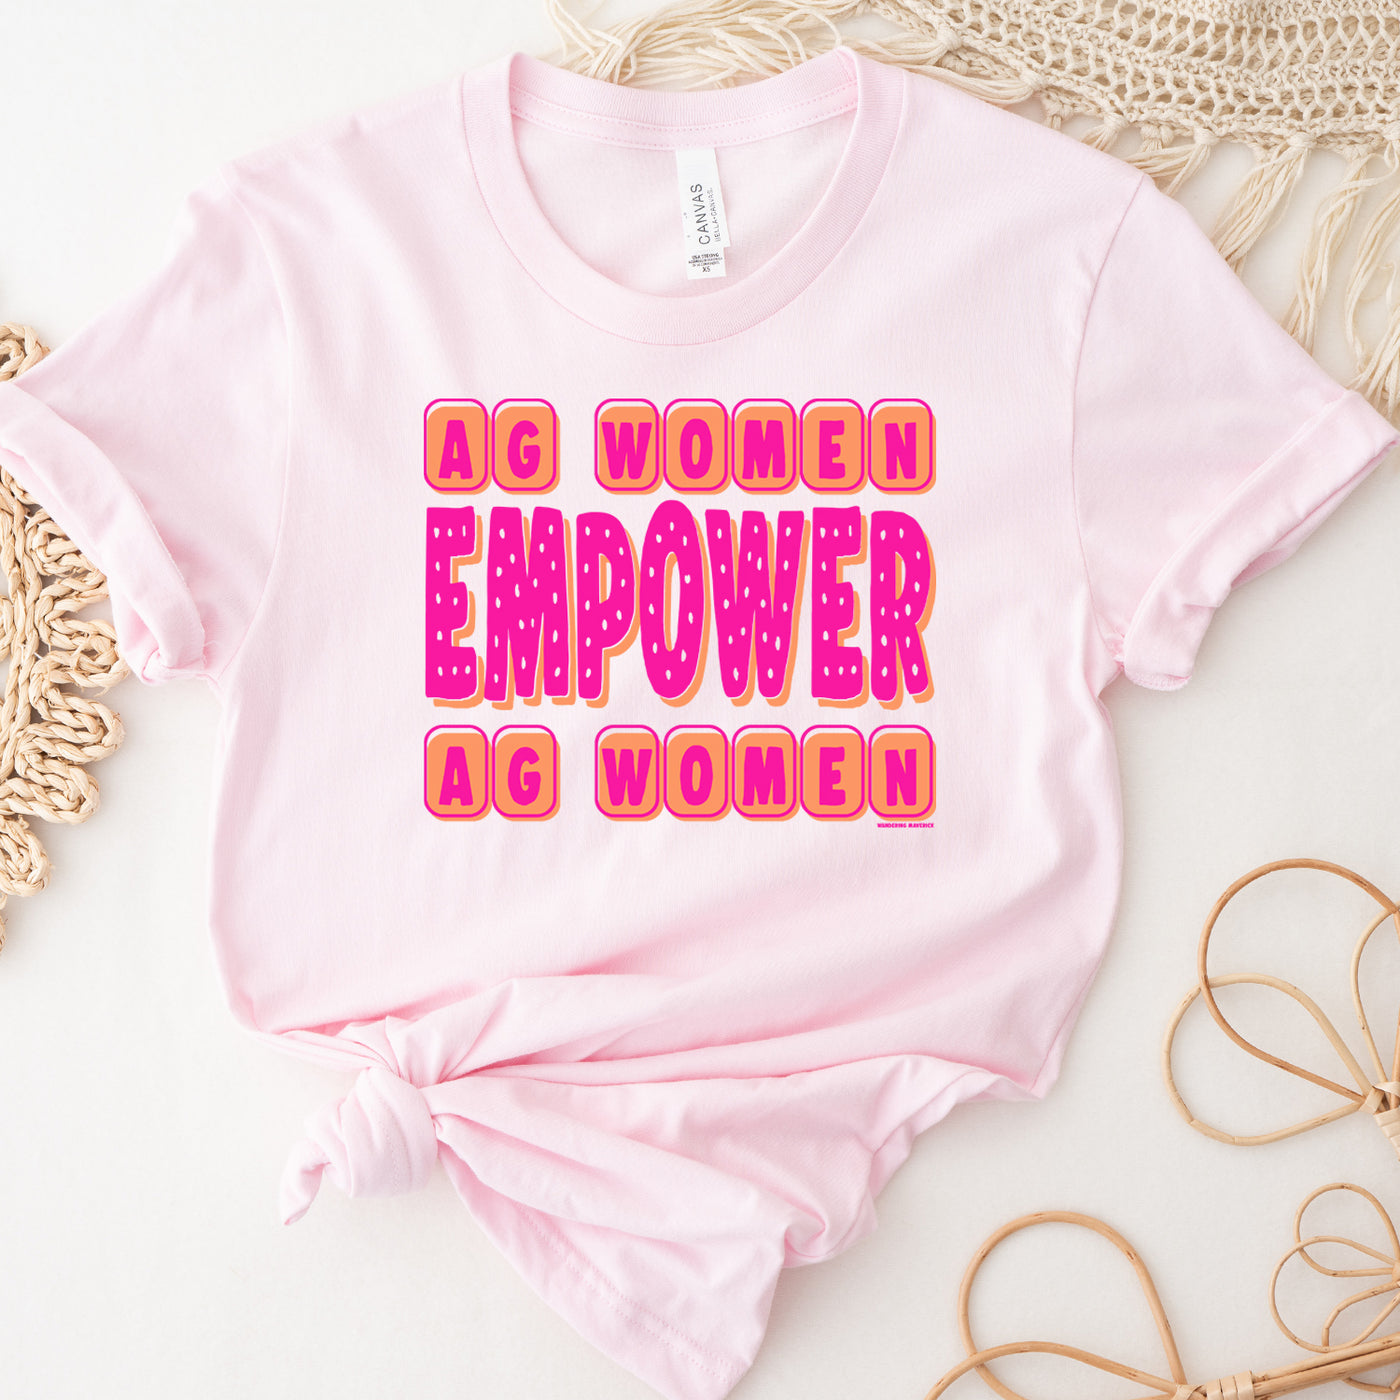 Ag Women Empower Ag Women T-Shirt (XS-4XL) - Multiple Colors!